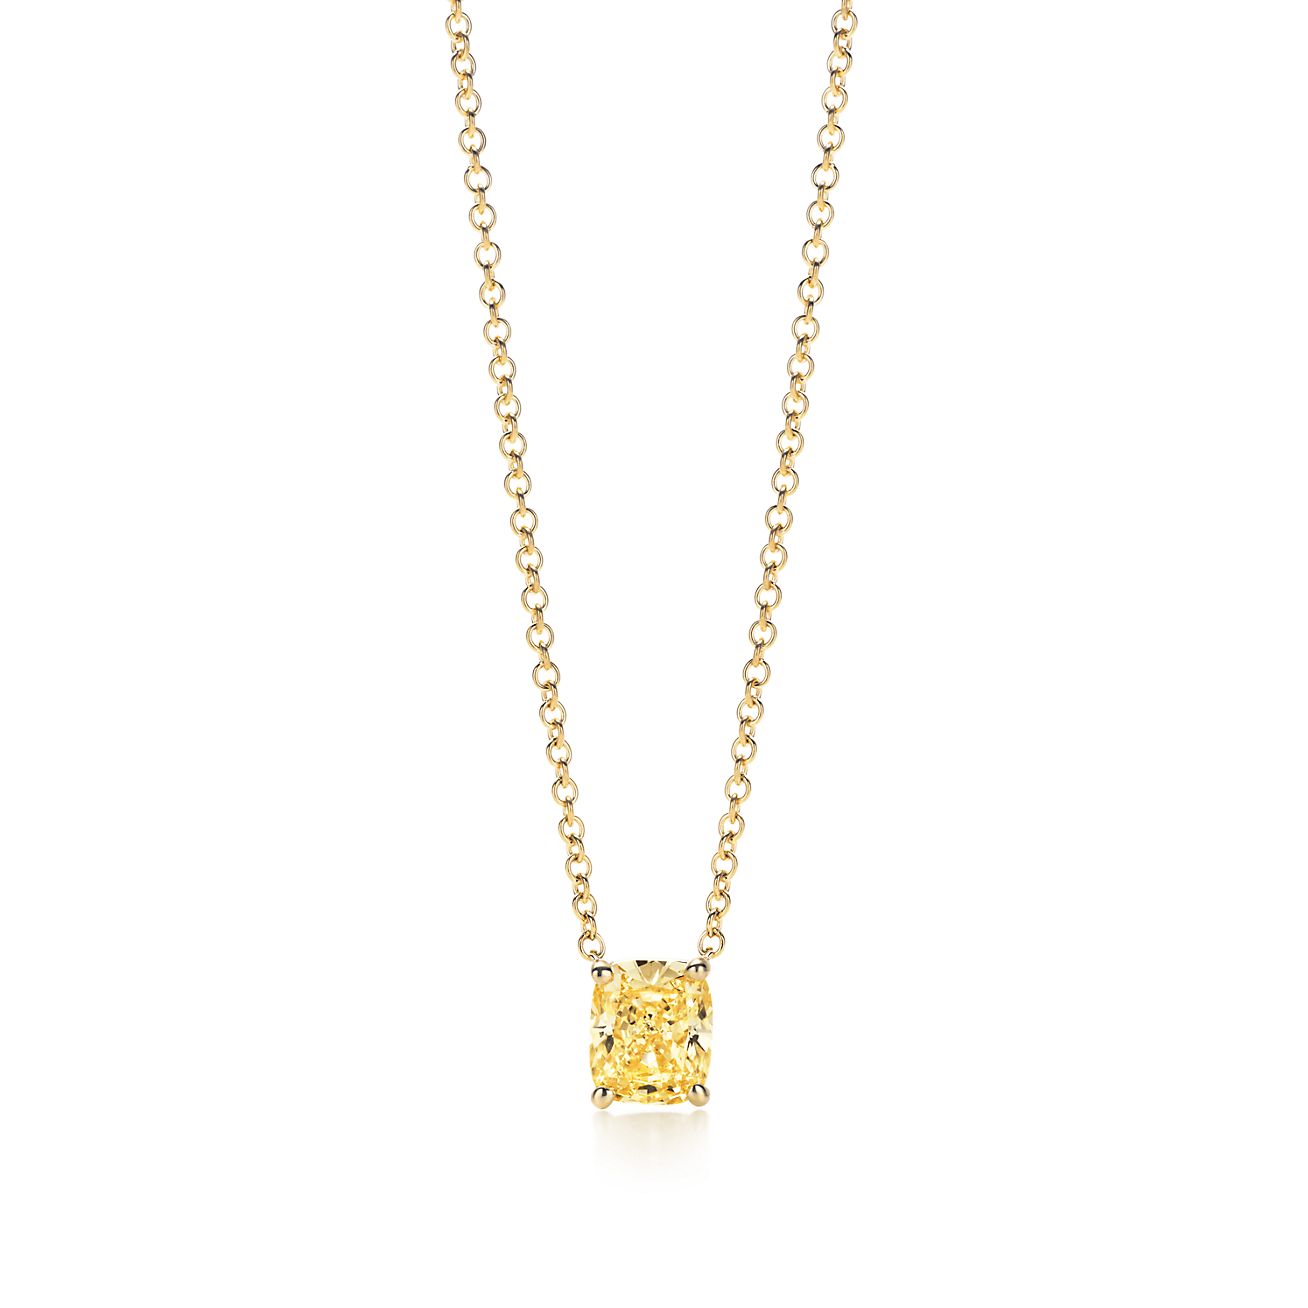 Tiffany and Co. Diamond Lock Pendant Set in Solid 18 Karat Yellow